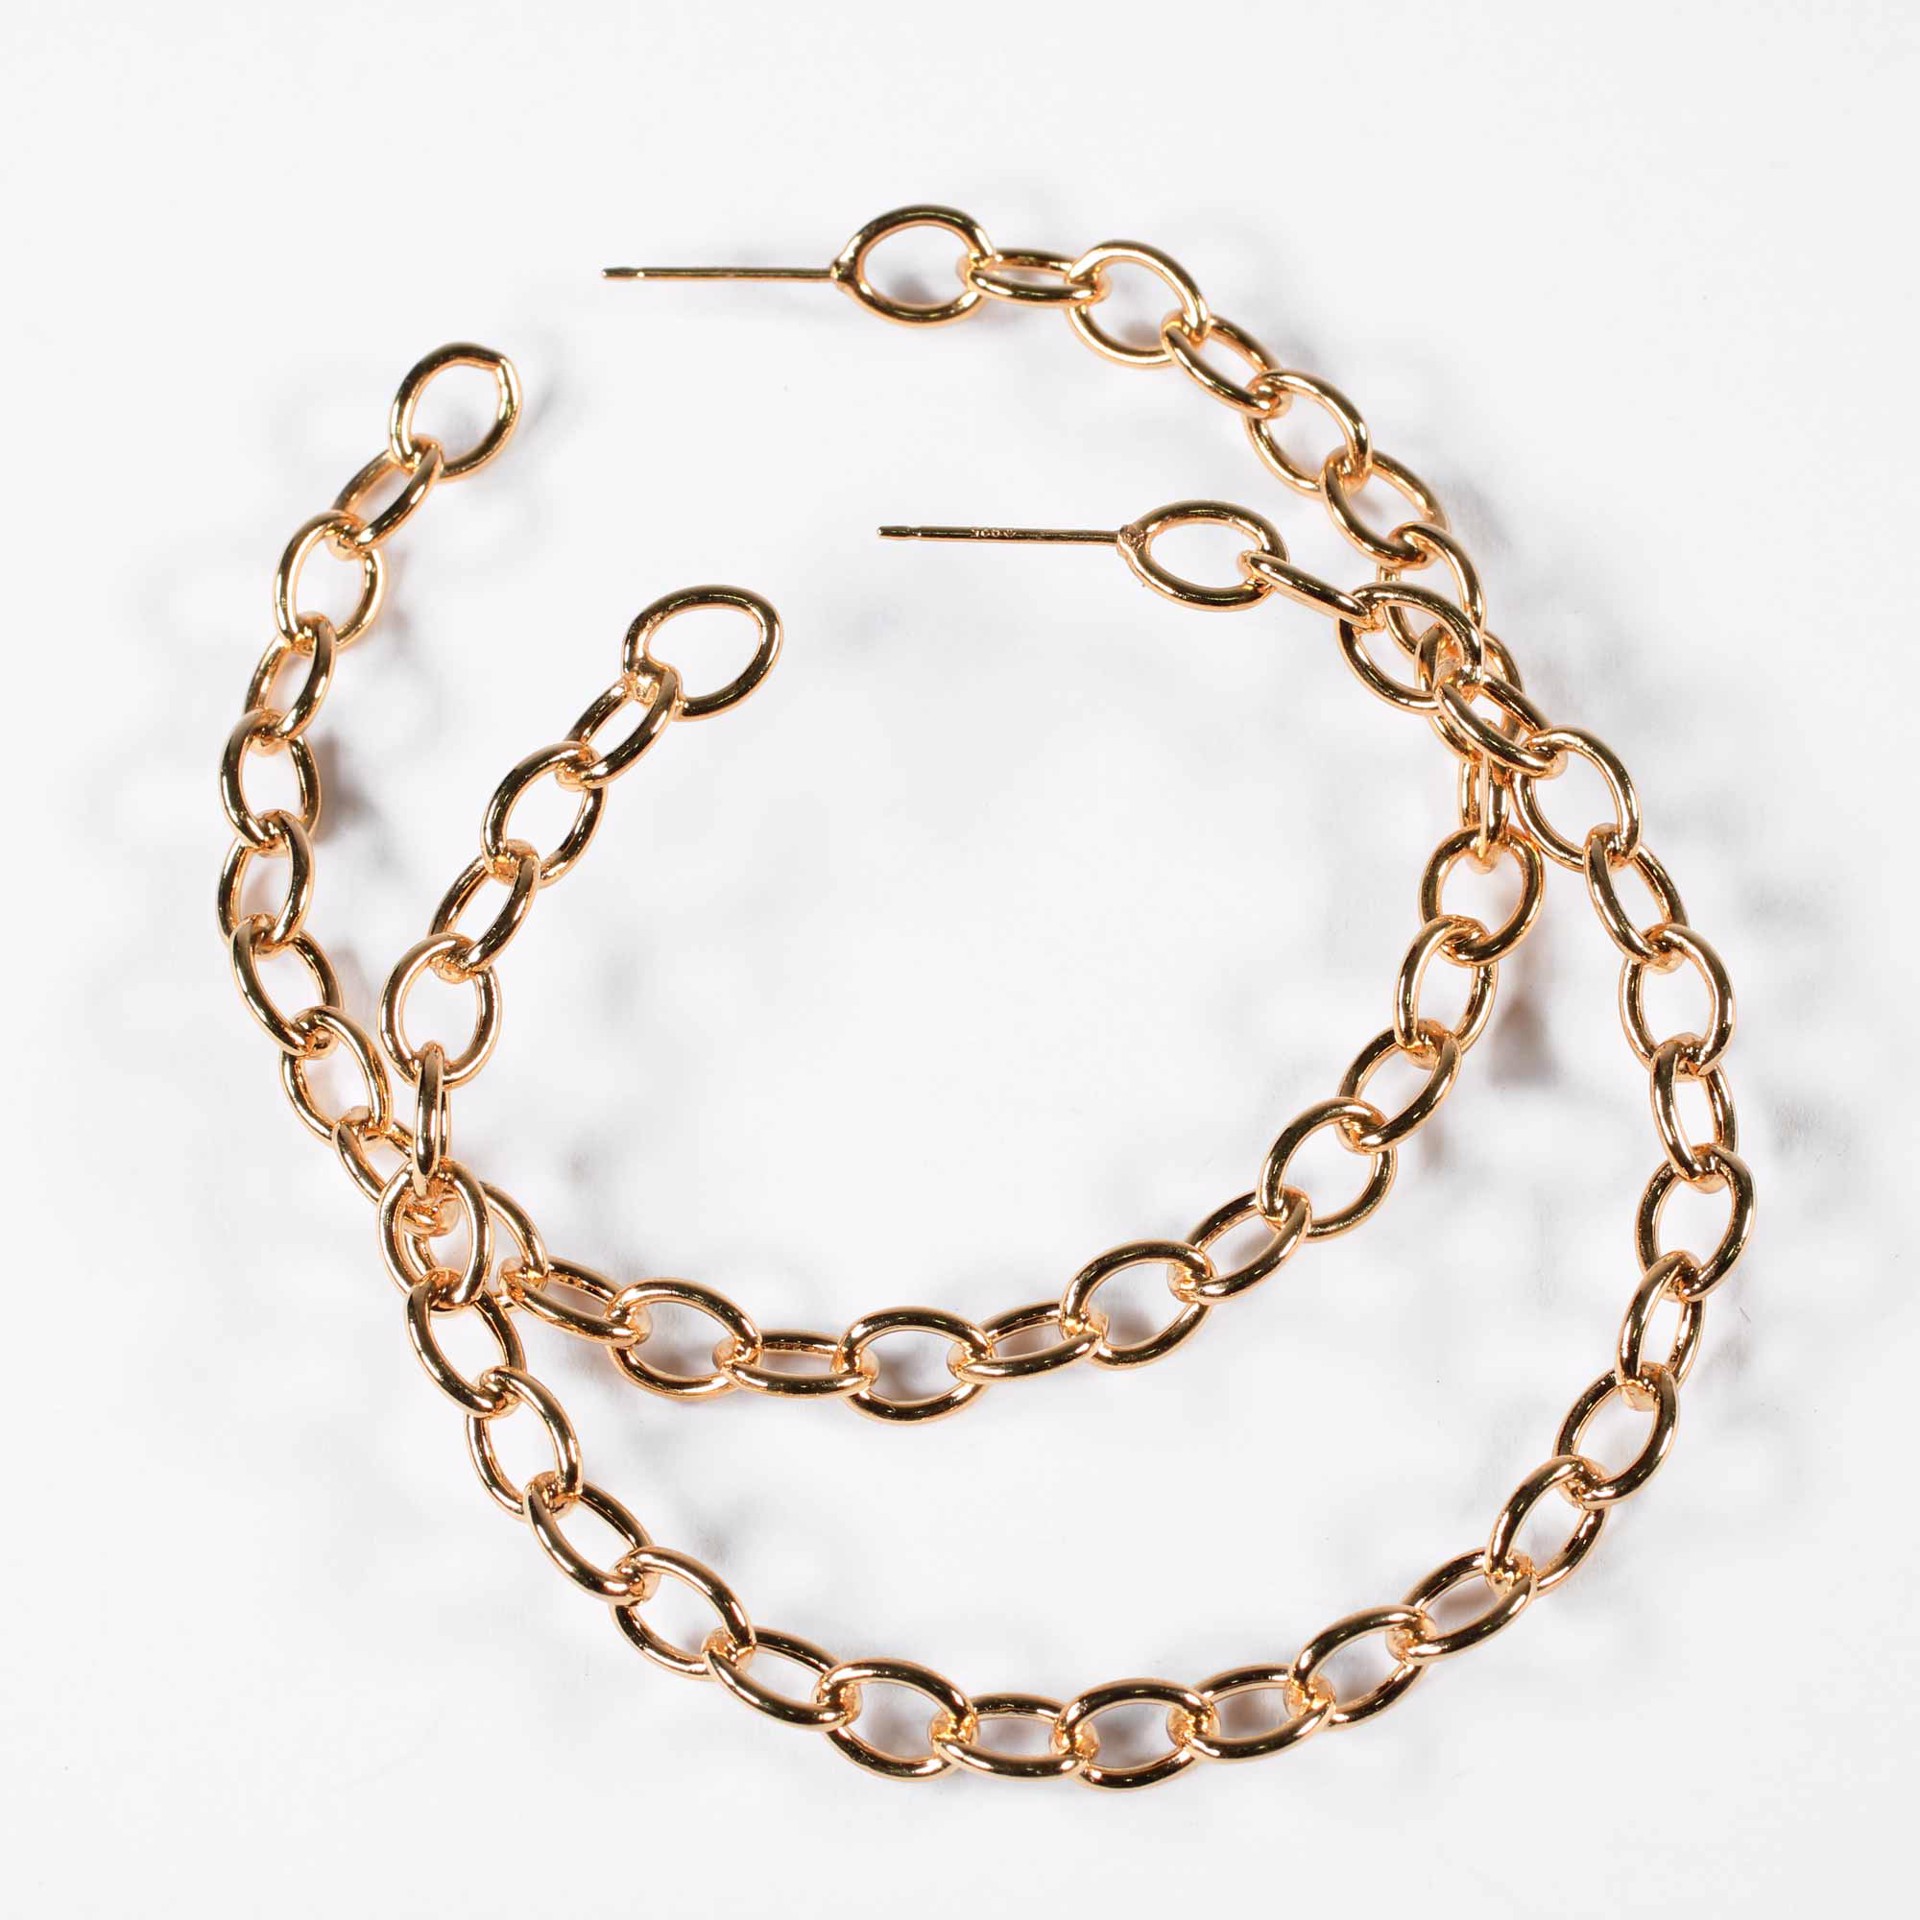 Gold Baby Chain Hoops by Amelia Toelke